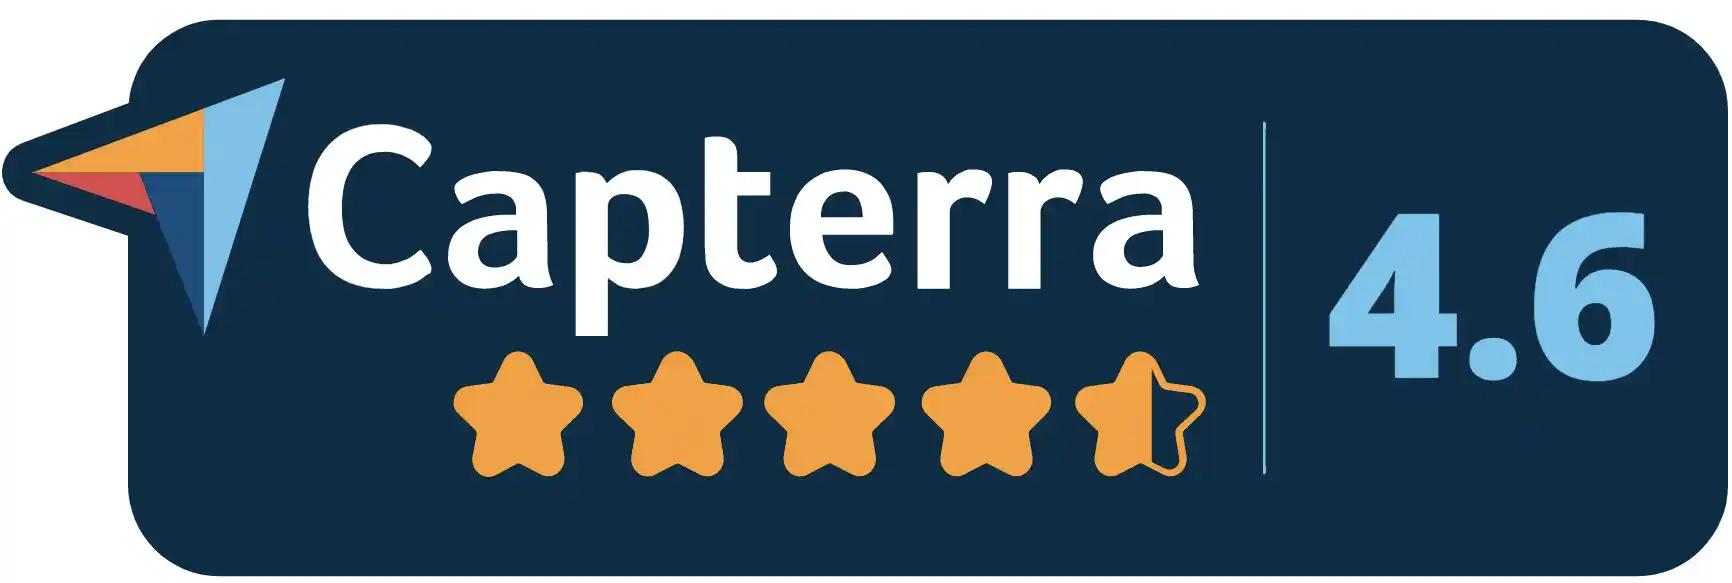 4.6 star Capterra rating